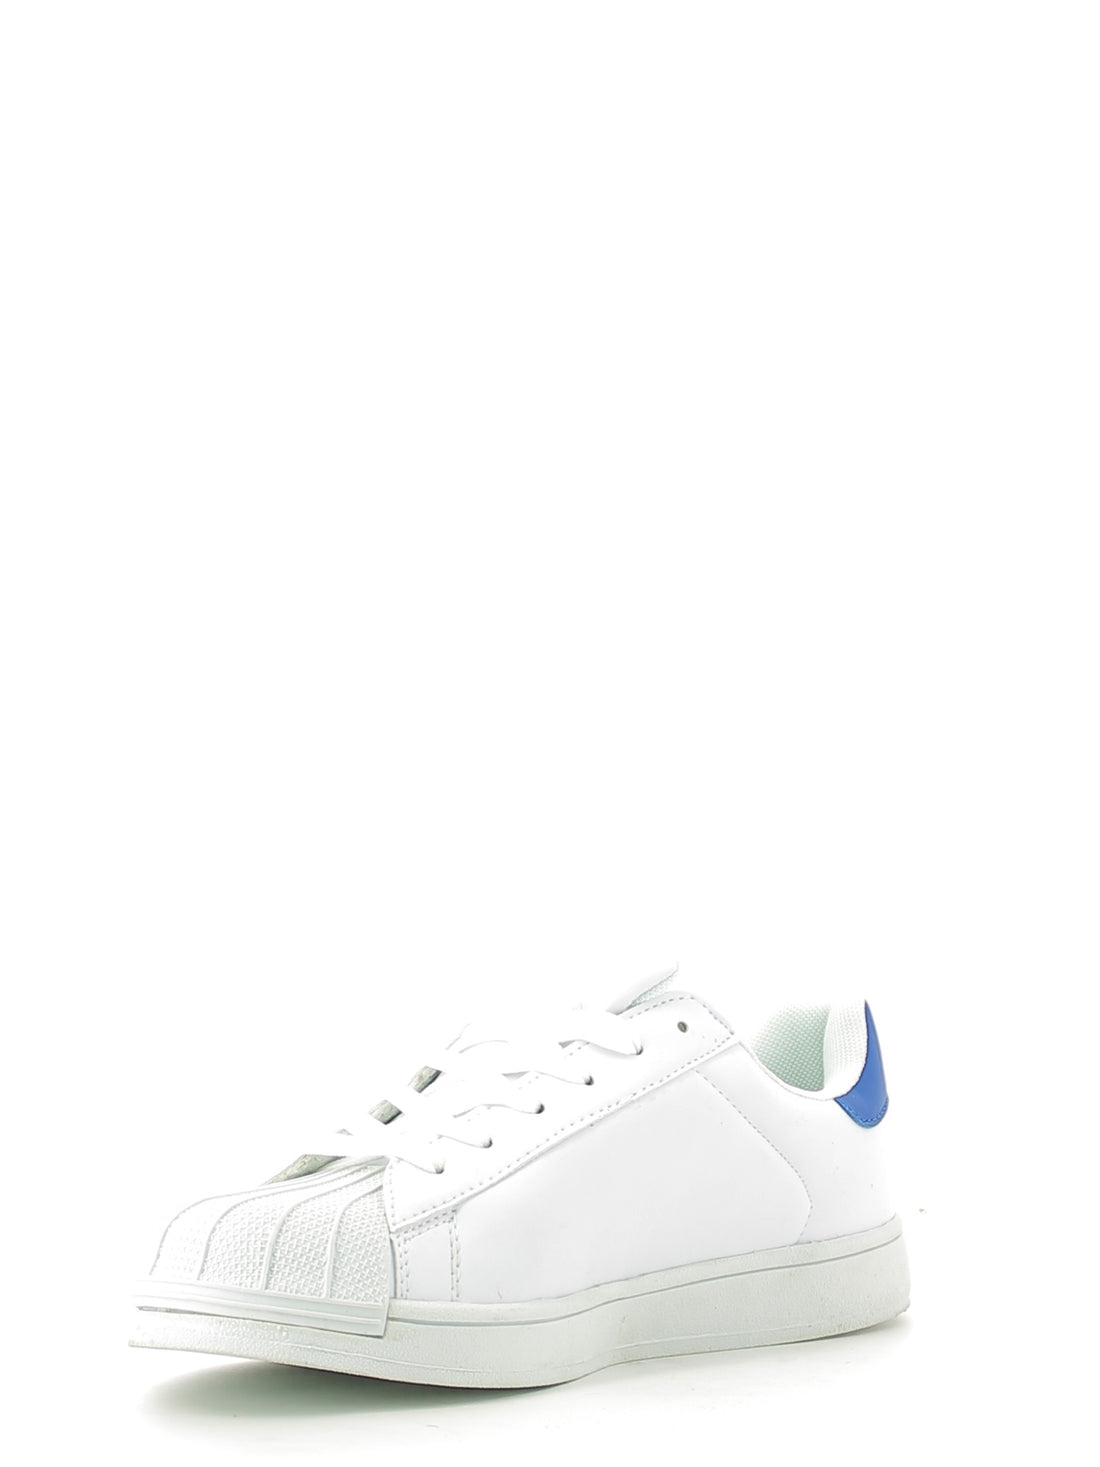 Sneakers Bianco Everlast